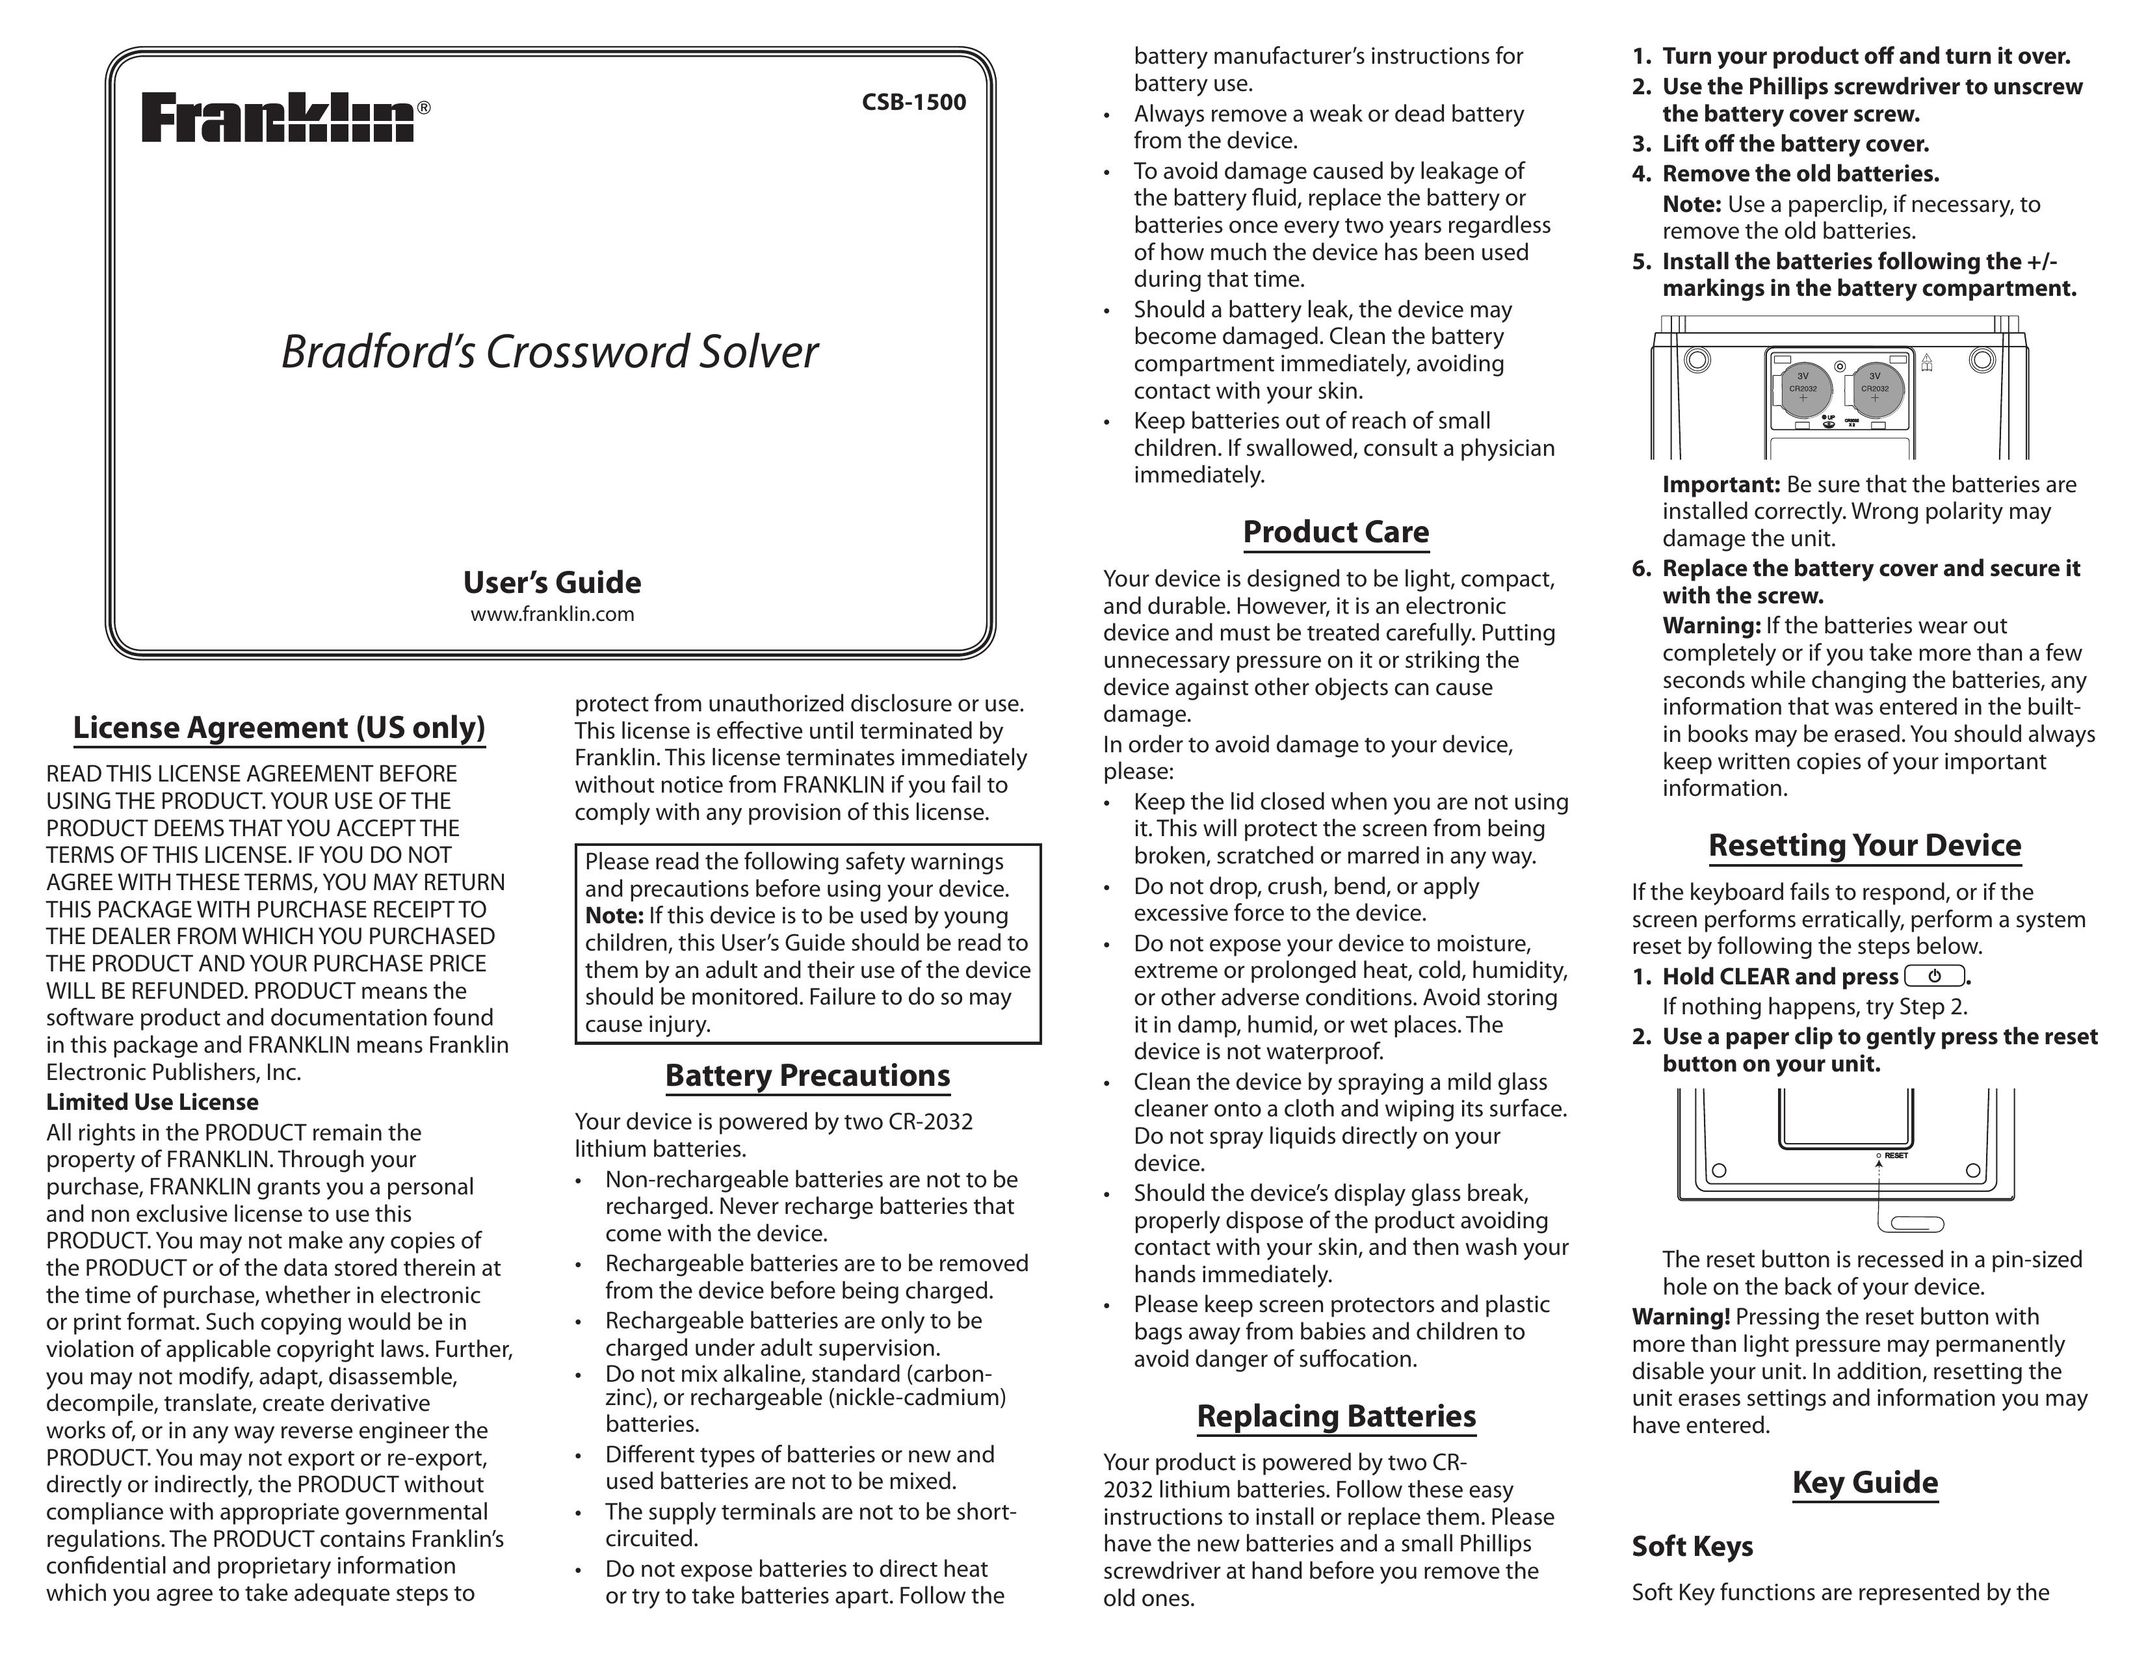 Franklin Bradford's Crossword Solver Table Top Game User Manual